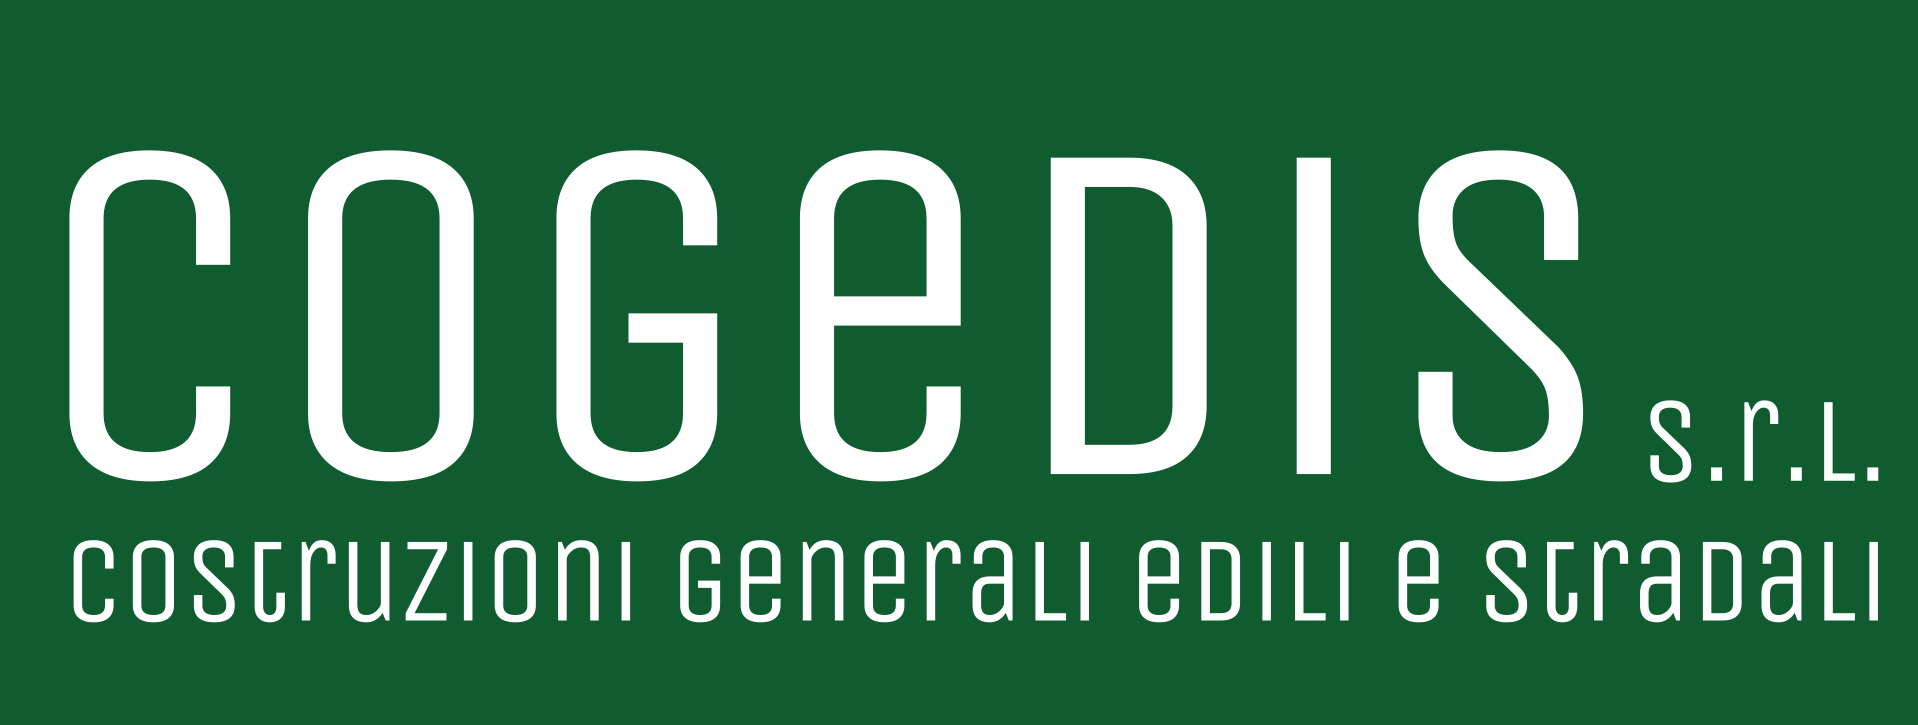 cogedis logo vector